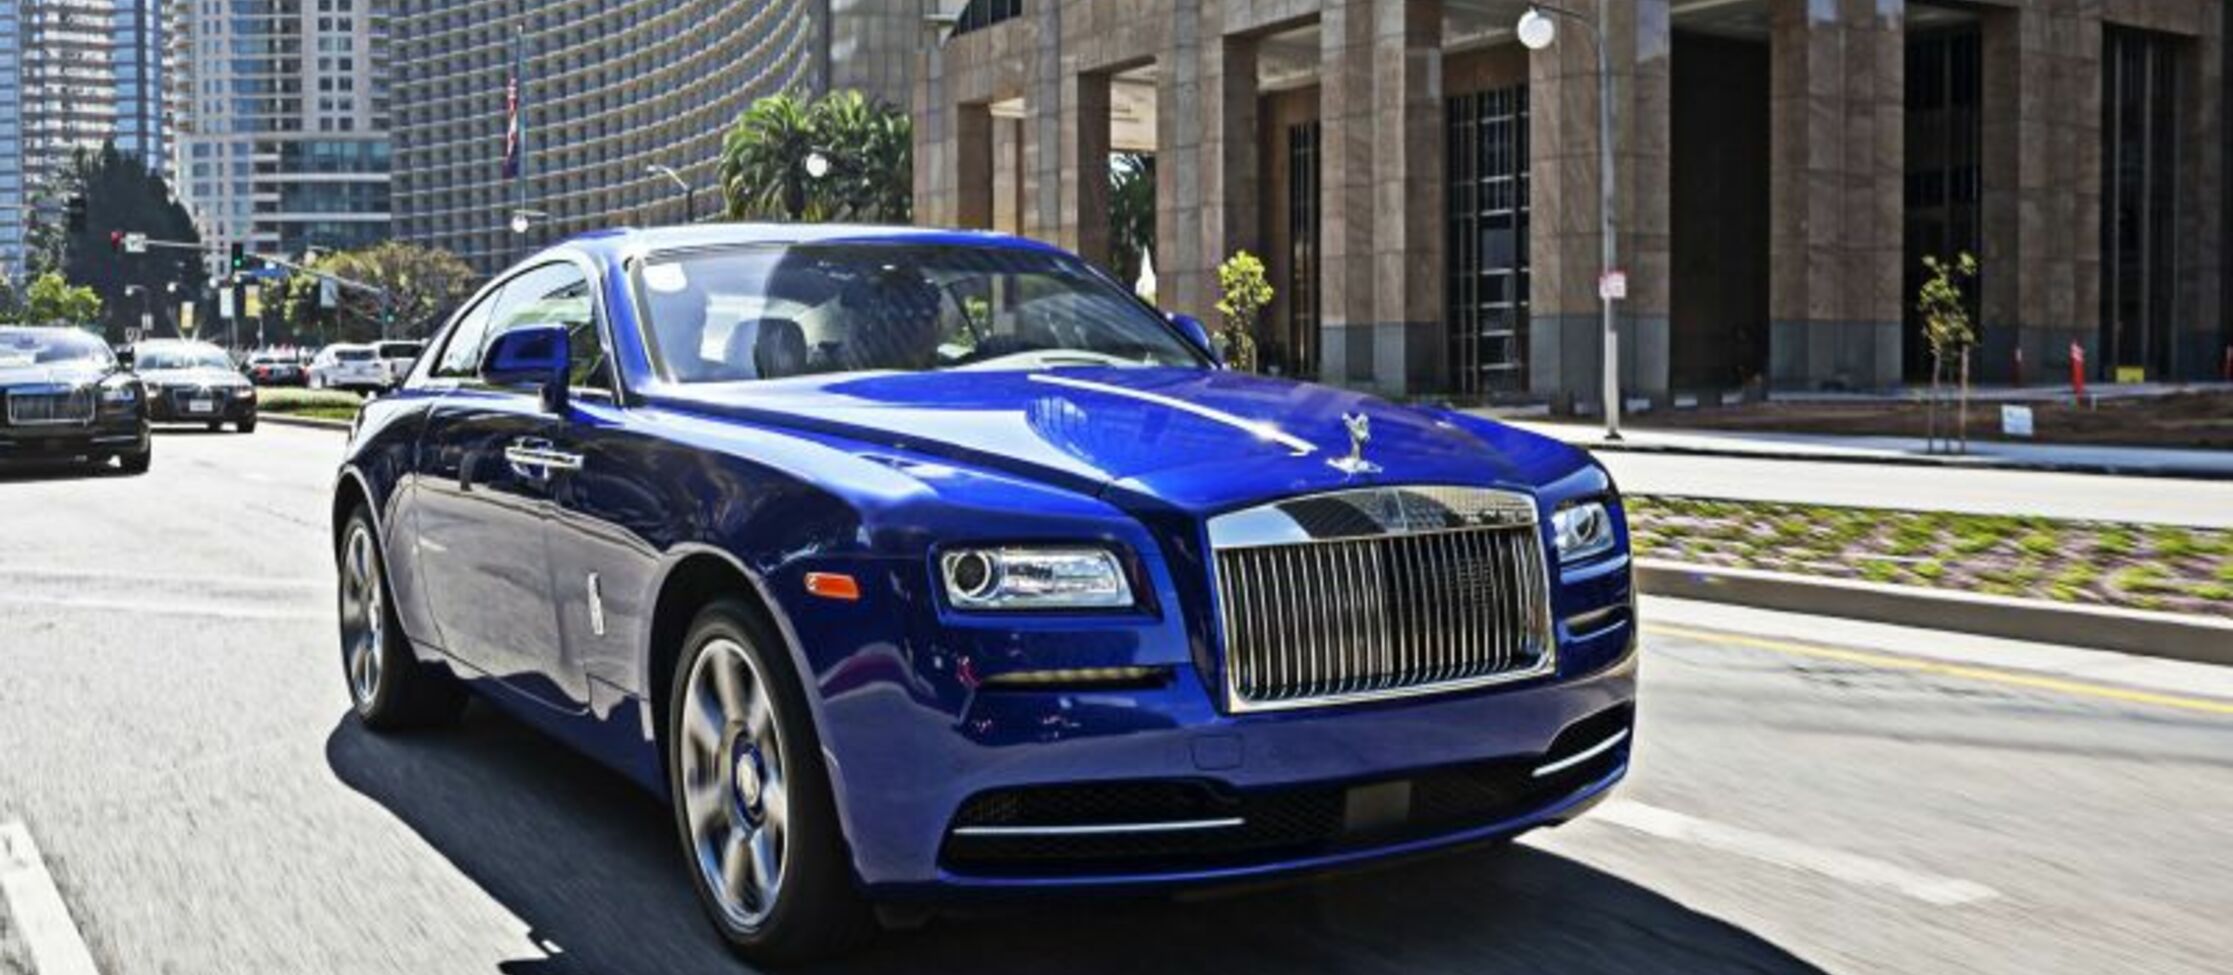 2016 RollsRoyce Wraith Stock  GC3689 for sale near Chicago IL  IL Rolls Royce Dealer